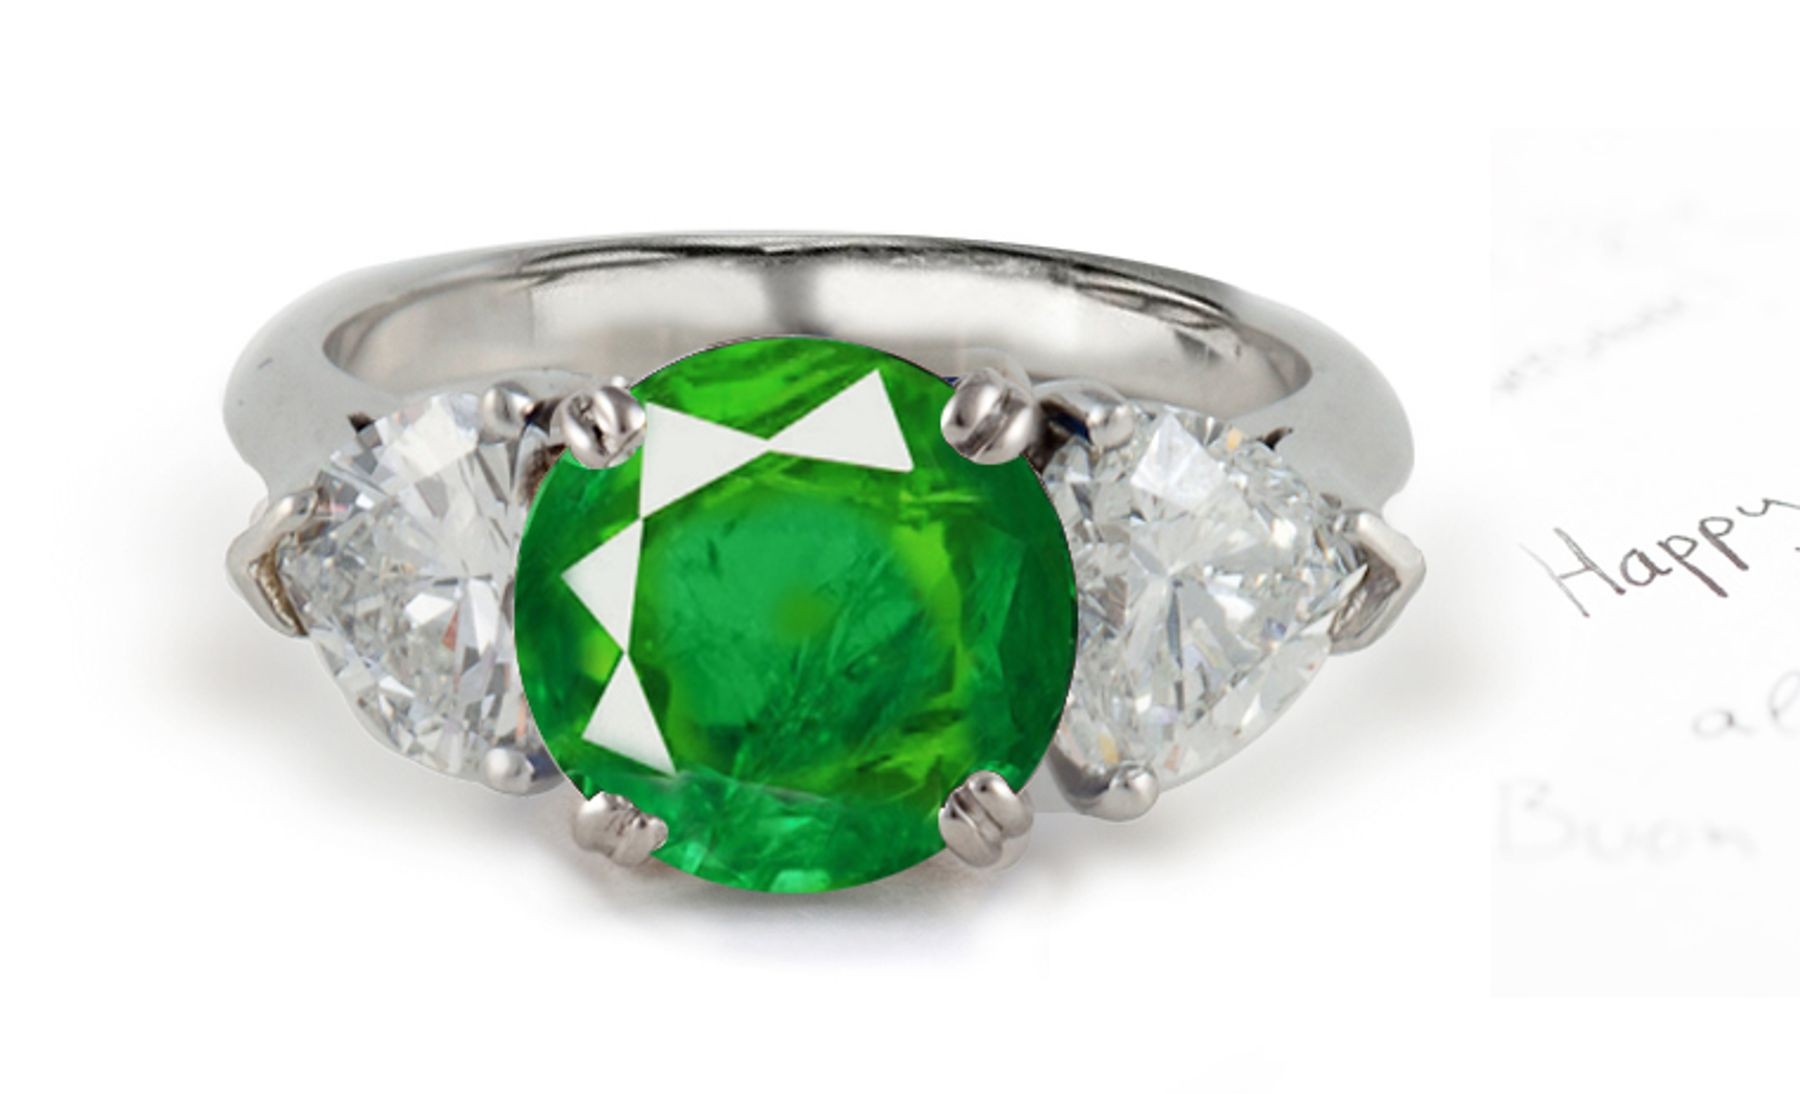 Simple Designs: Natural Emerald With Genuine Diamonds Three-Stone Ring in 14k White Gold & Platinum